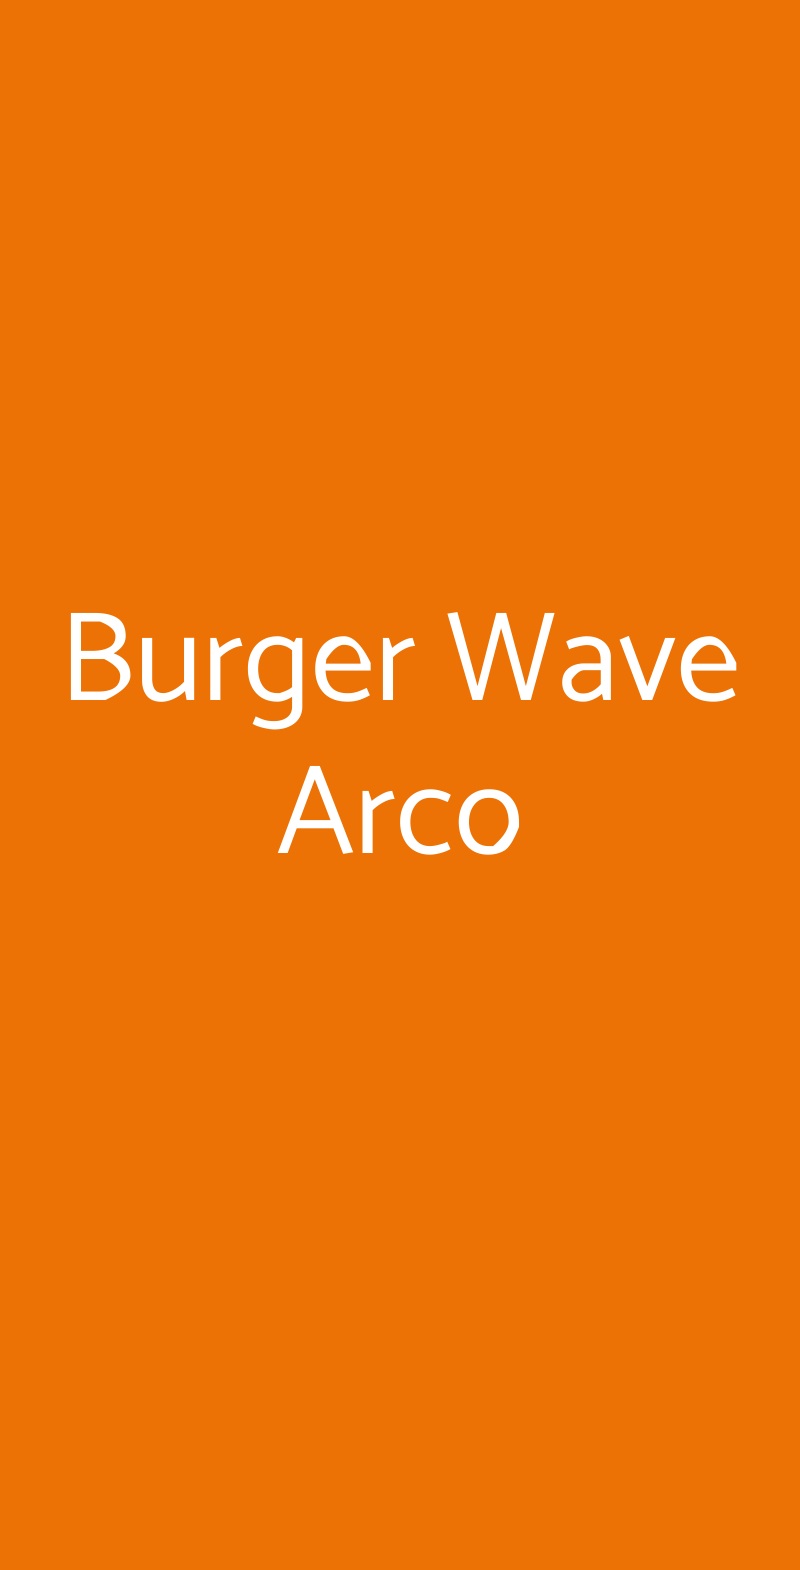 Burger Wave Arco Milano menù 1 pagina